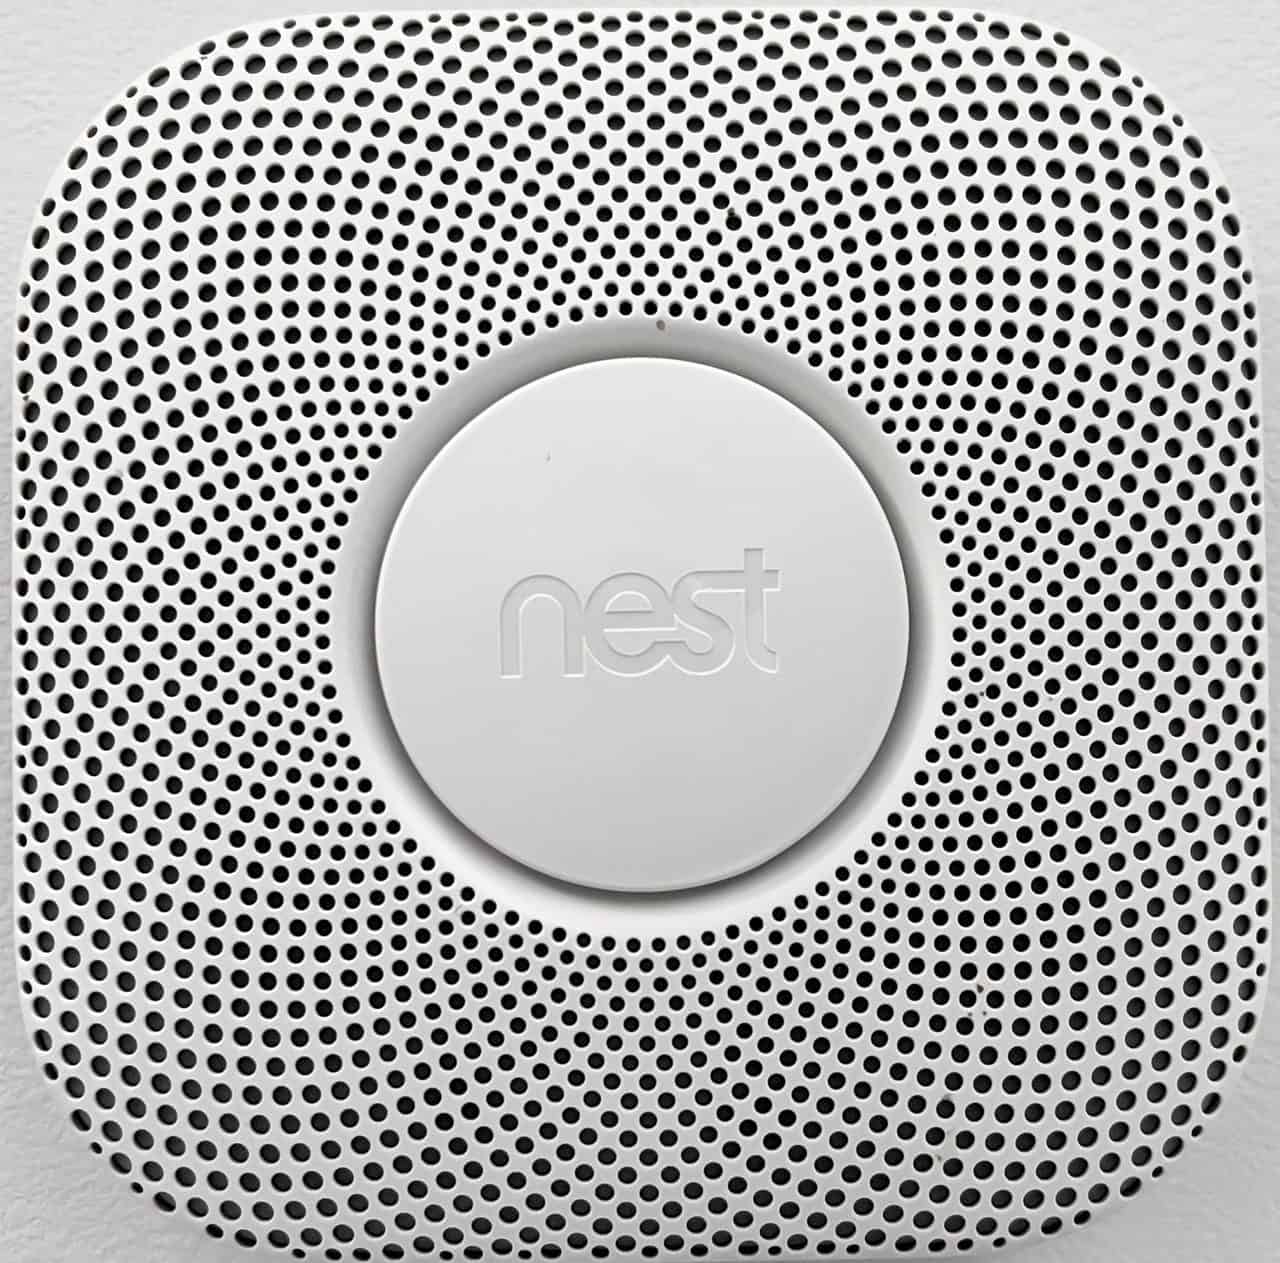 Google-Nest-Protect-CO-Kohlenmonoxid-Gasmelder-Rauchmelder-Feuermelder-Detail